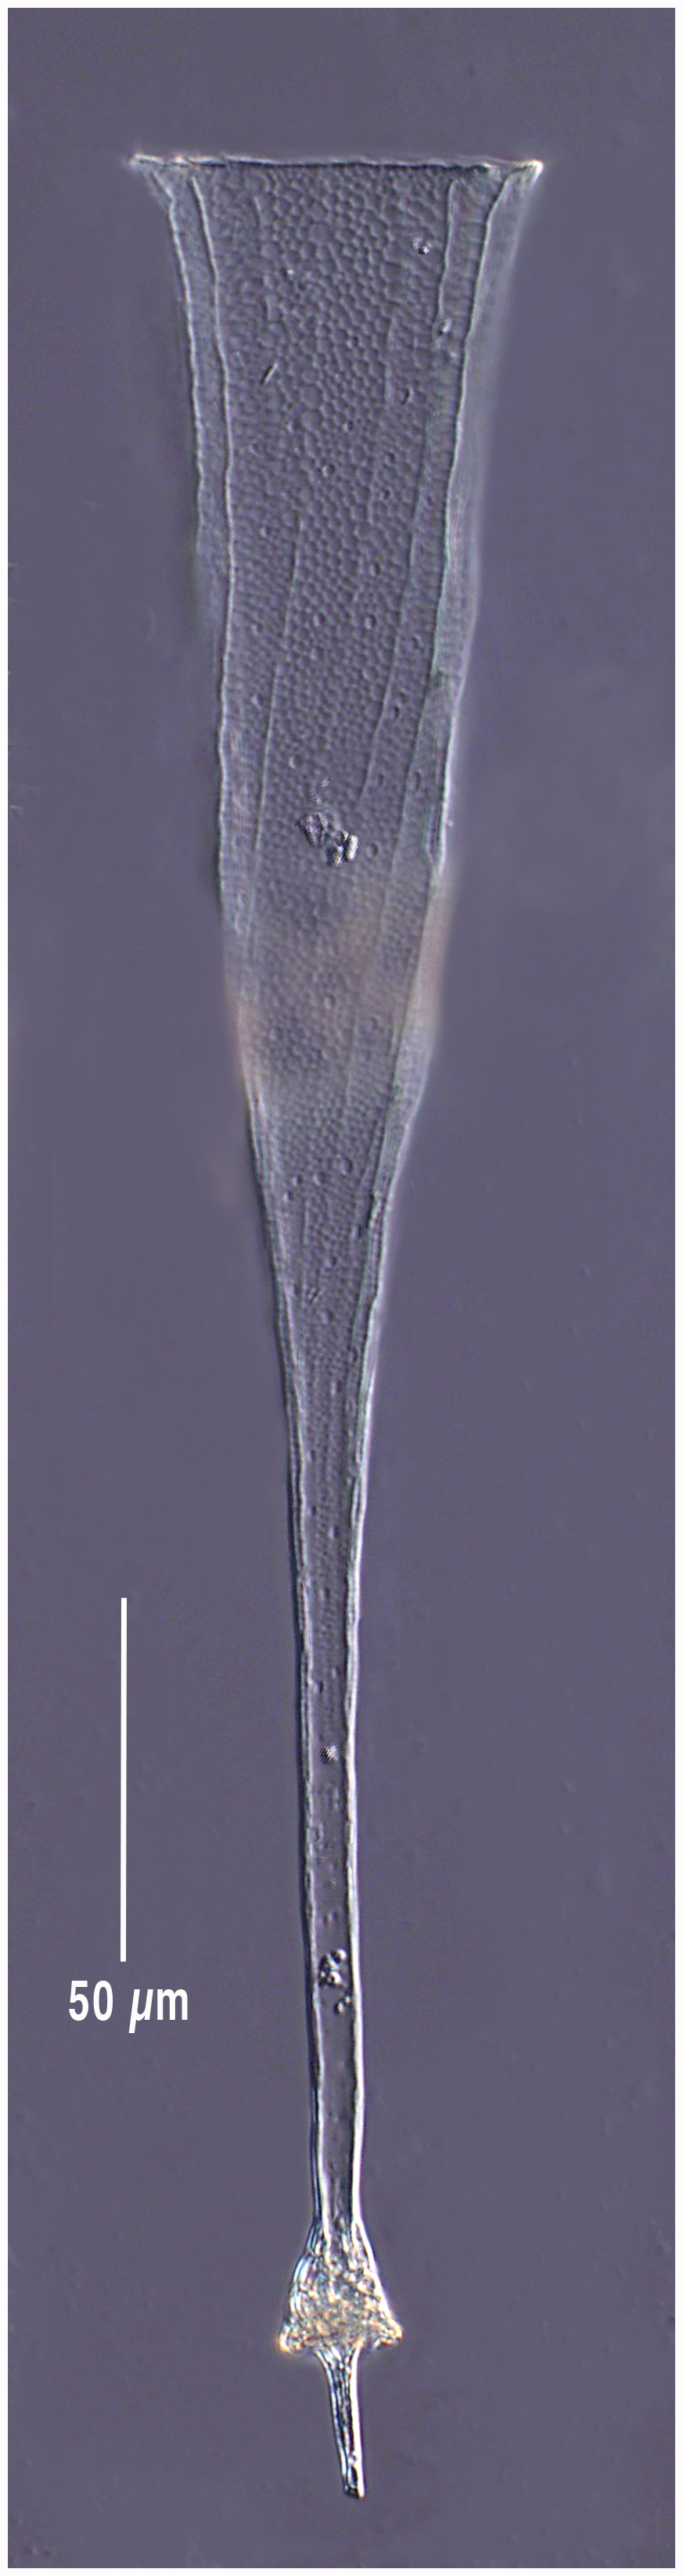 Lorica of Rhabdonellopsis longicaulis